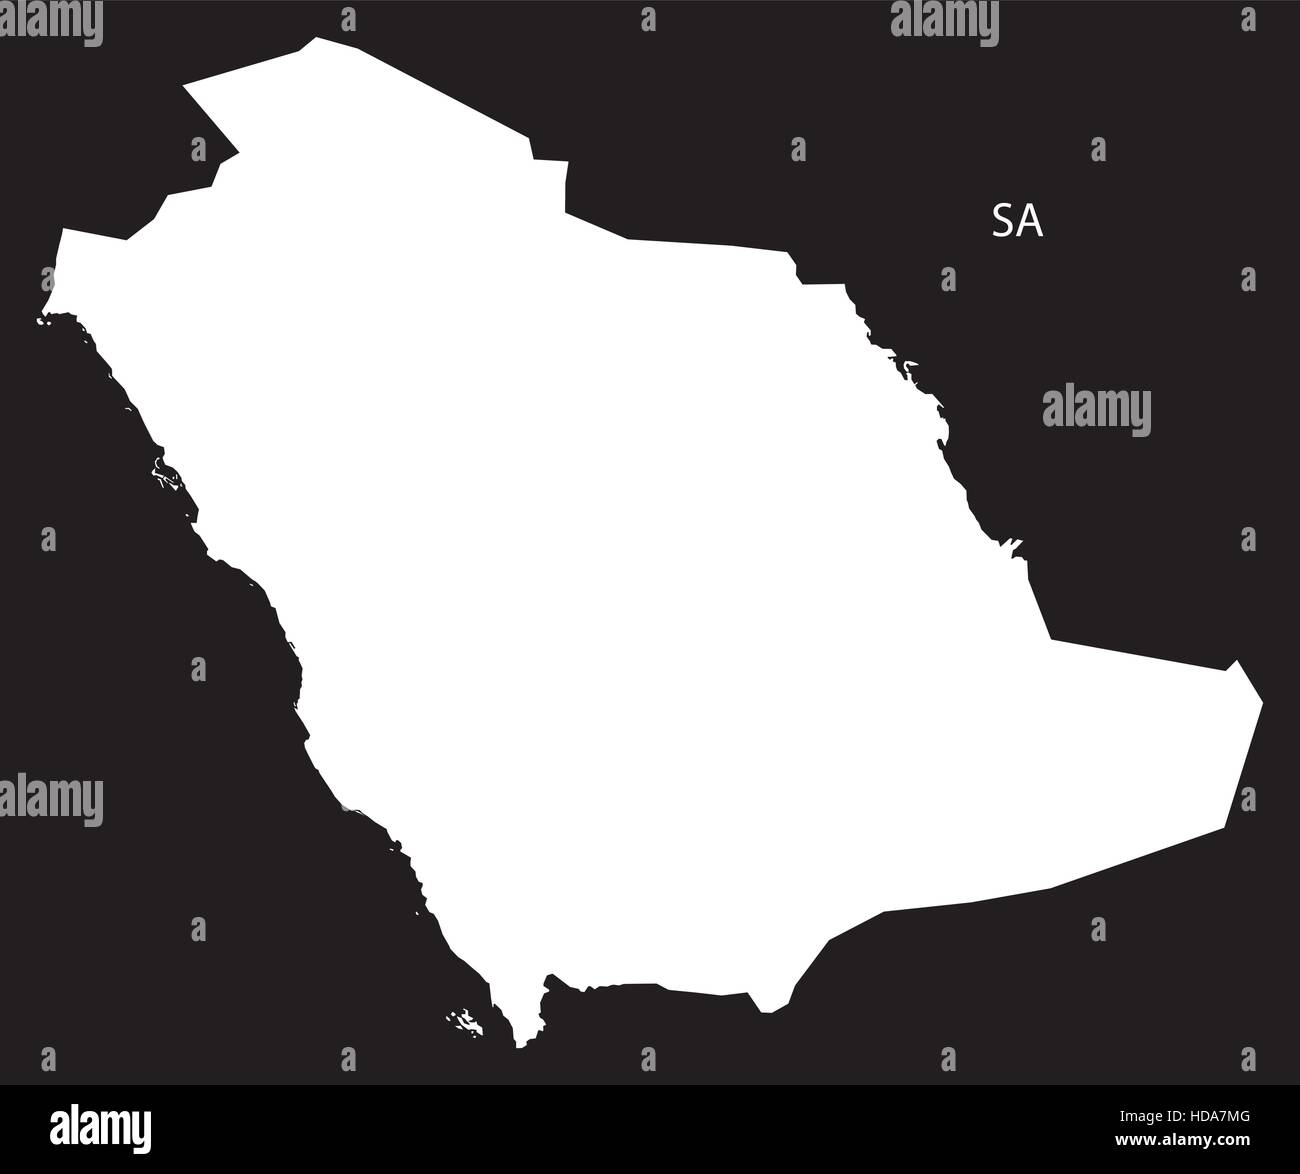 Saudi Arabia Map black and white illustration Stock Vector